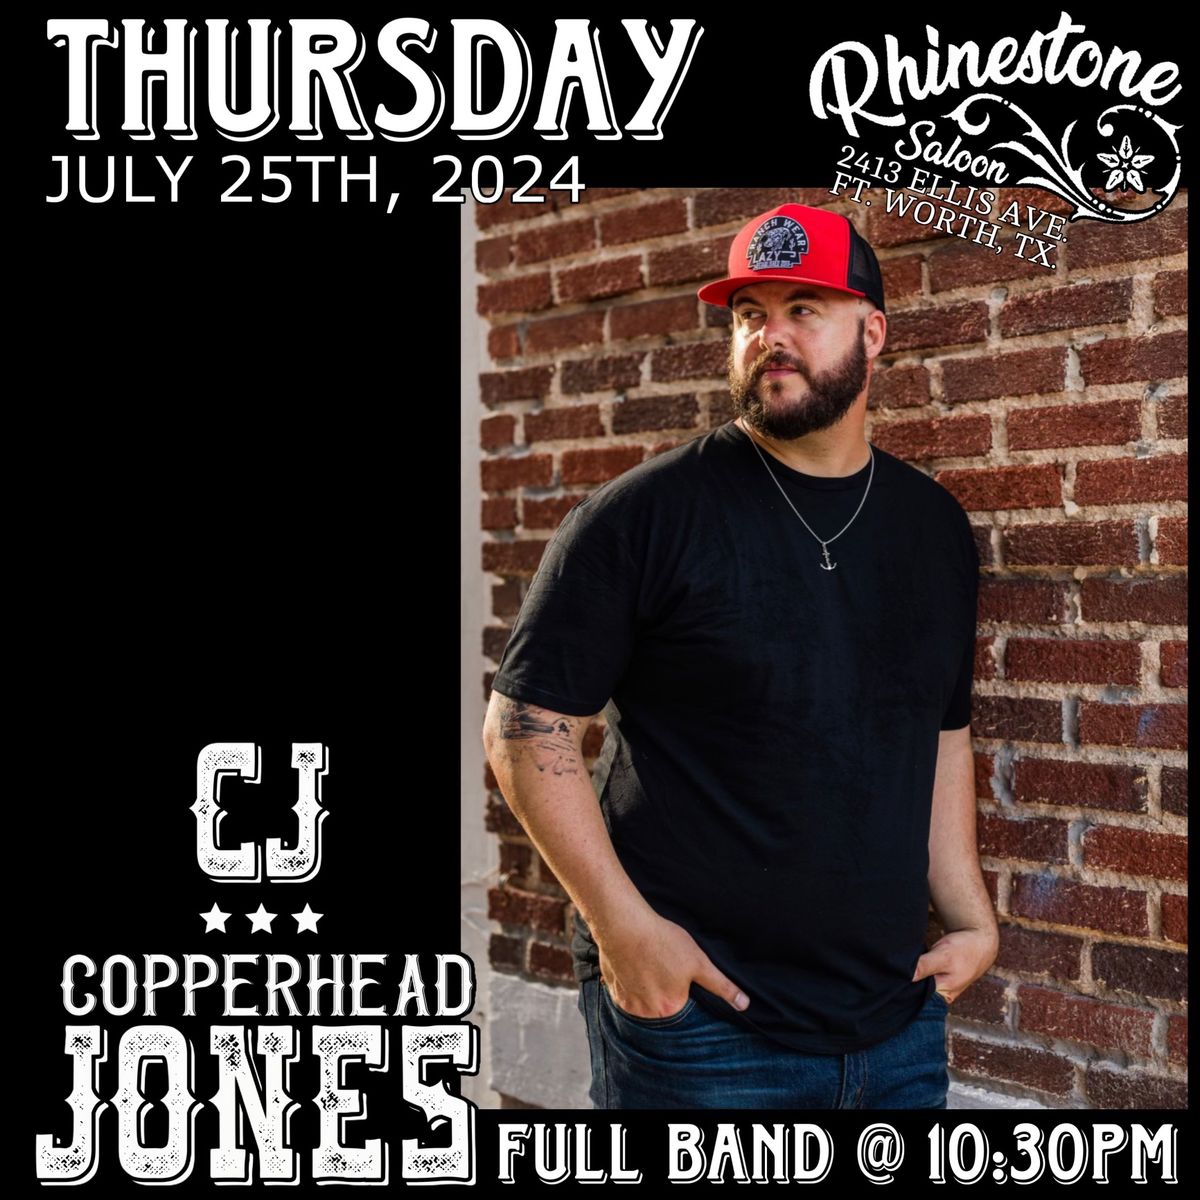 Copperhead Jones Full Band at Rhinestone Saloon